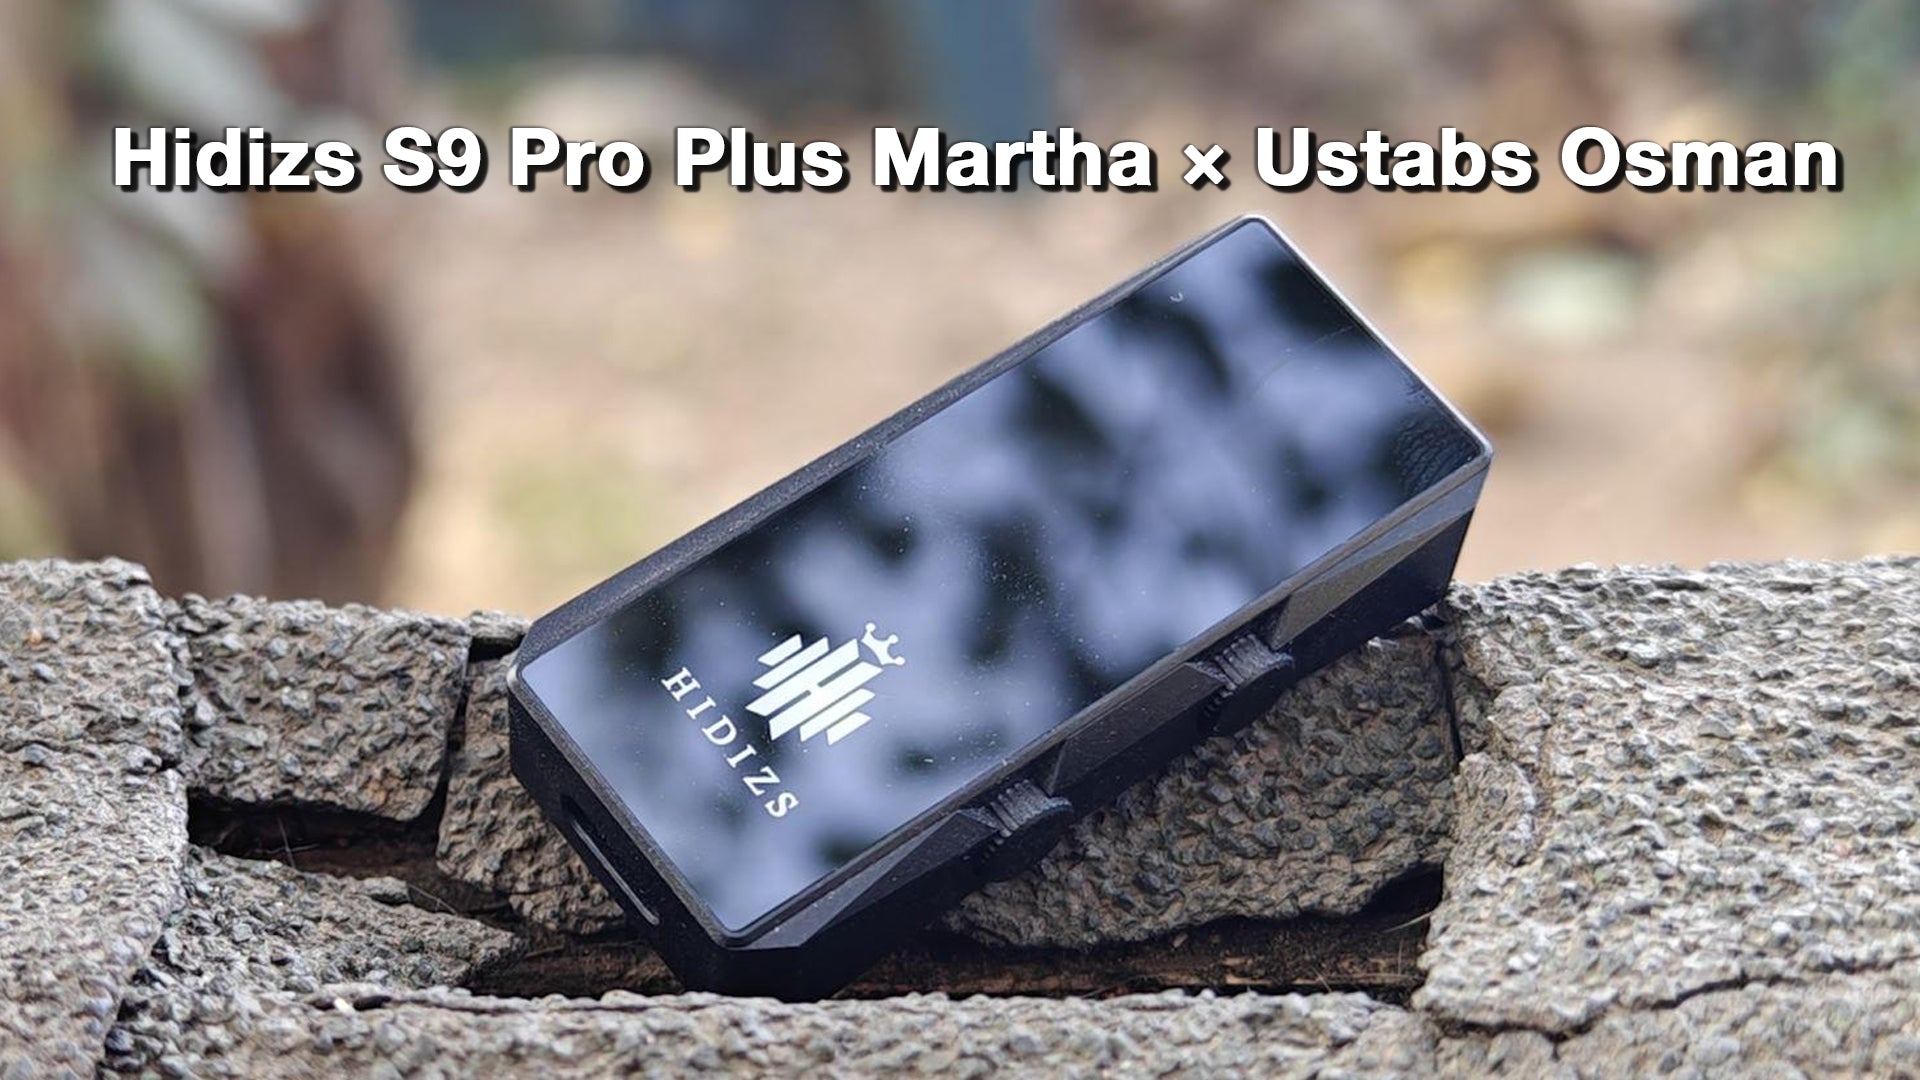 Hidizs S9 Pro Plus Martha Review - Ustabs Osman